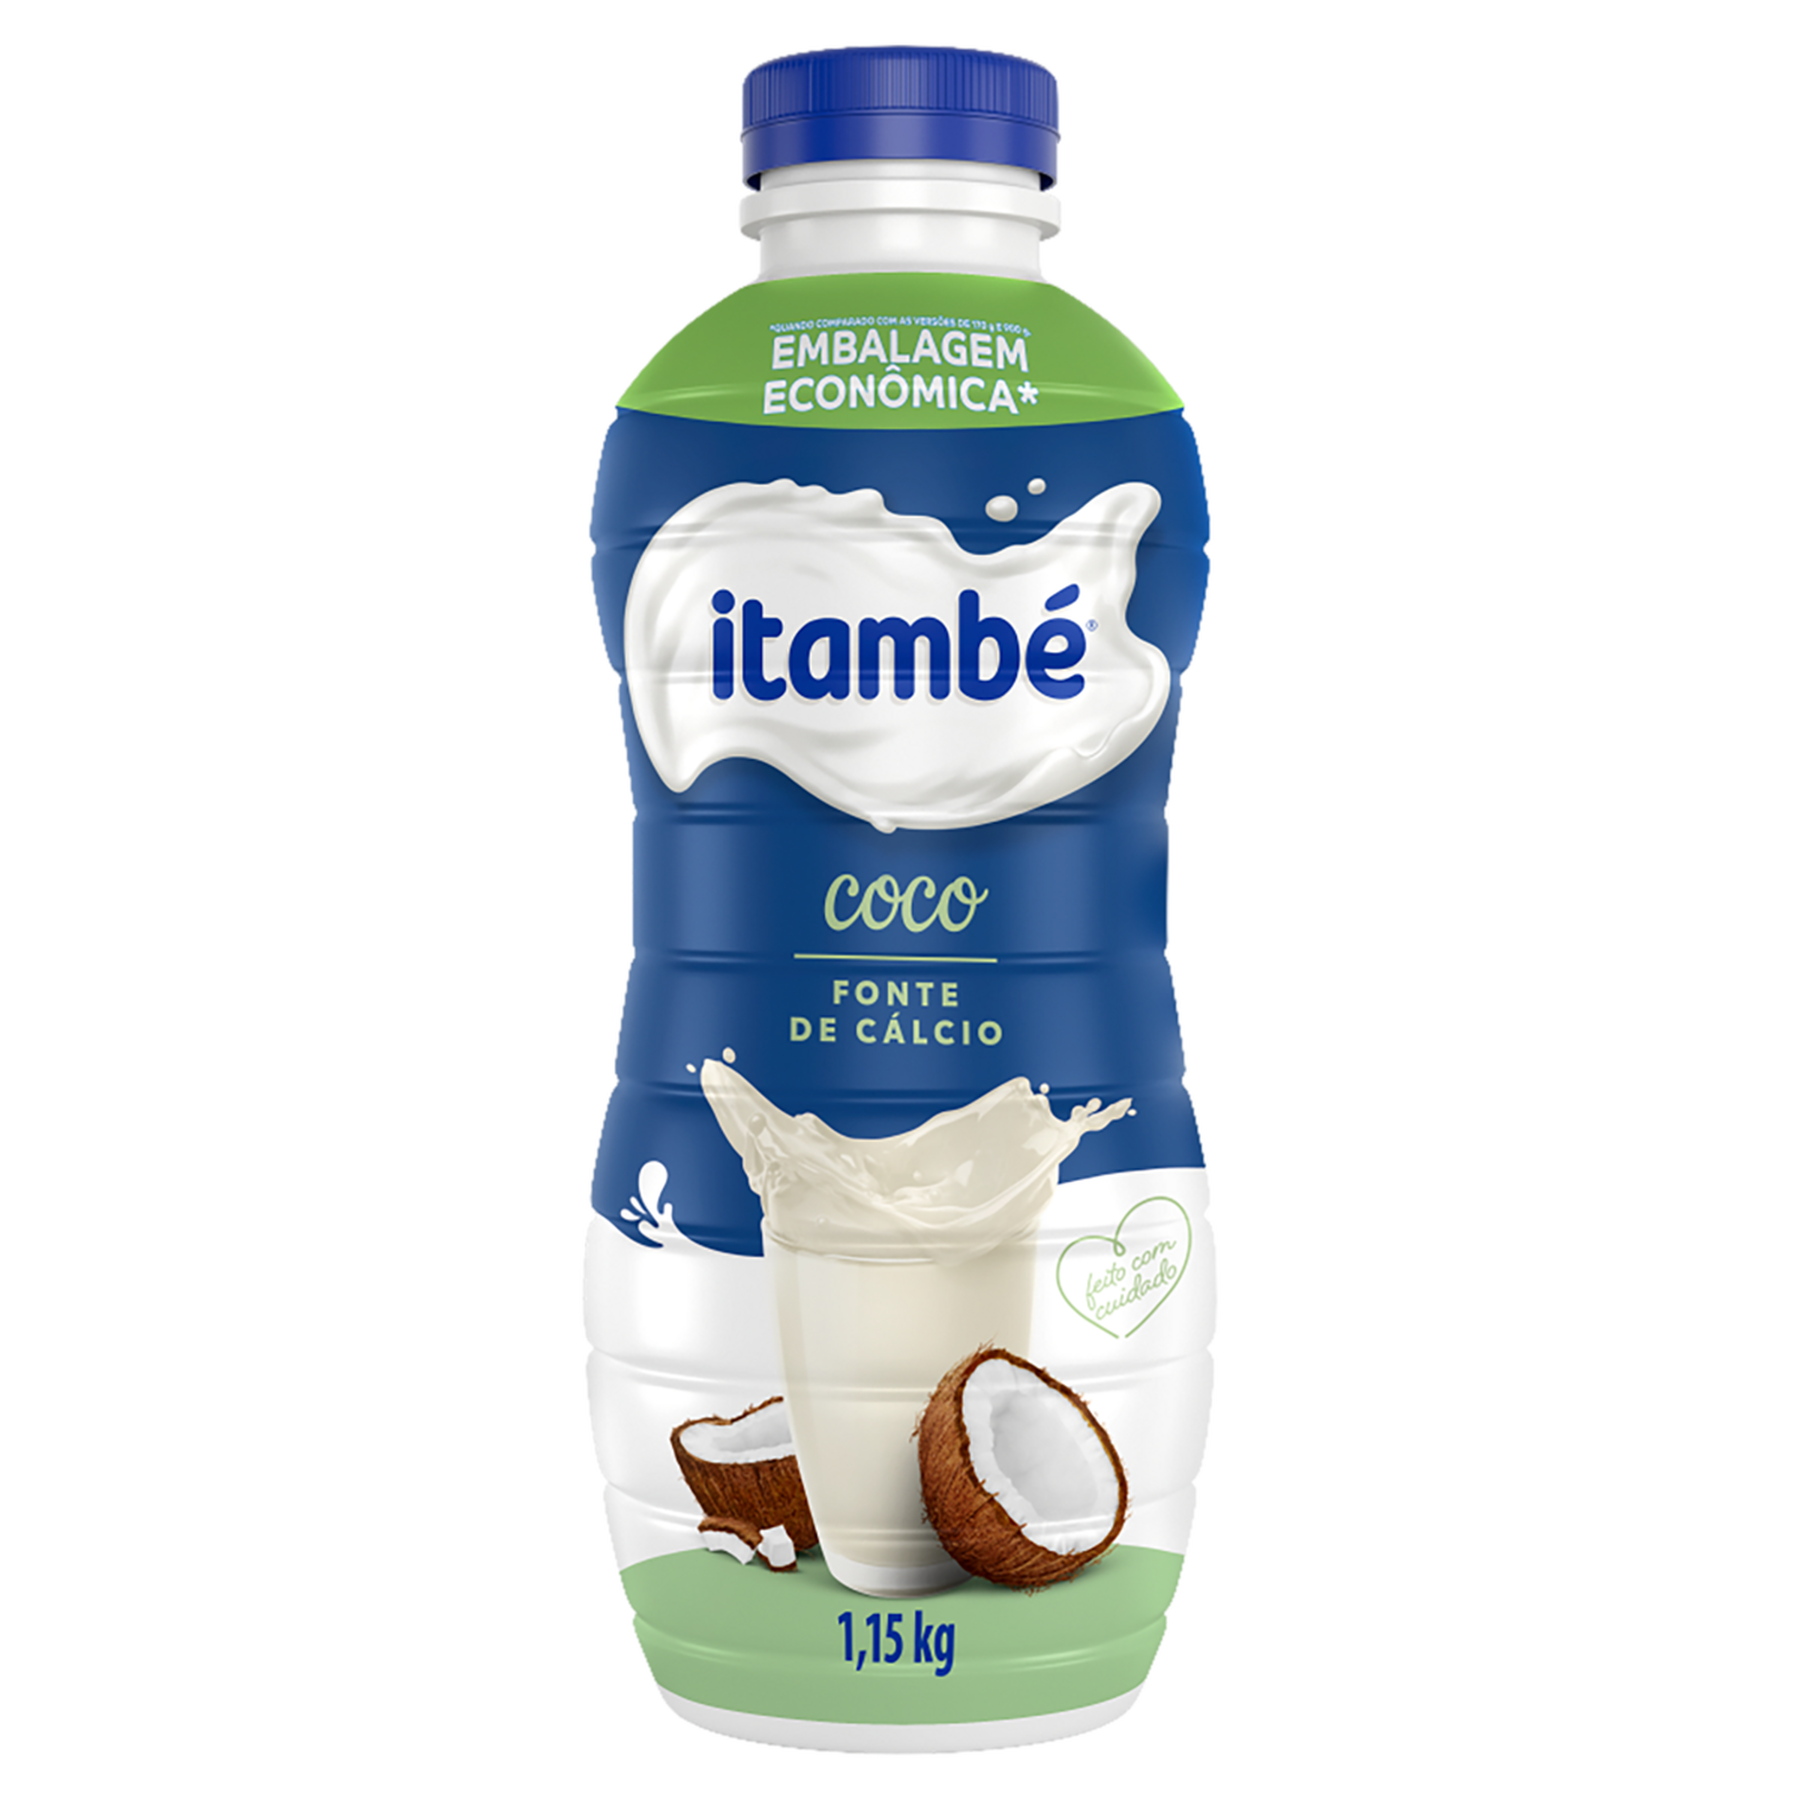 Iogurte Coco Itambé Garrafa 1,15kg - Embalagem Econômica